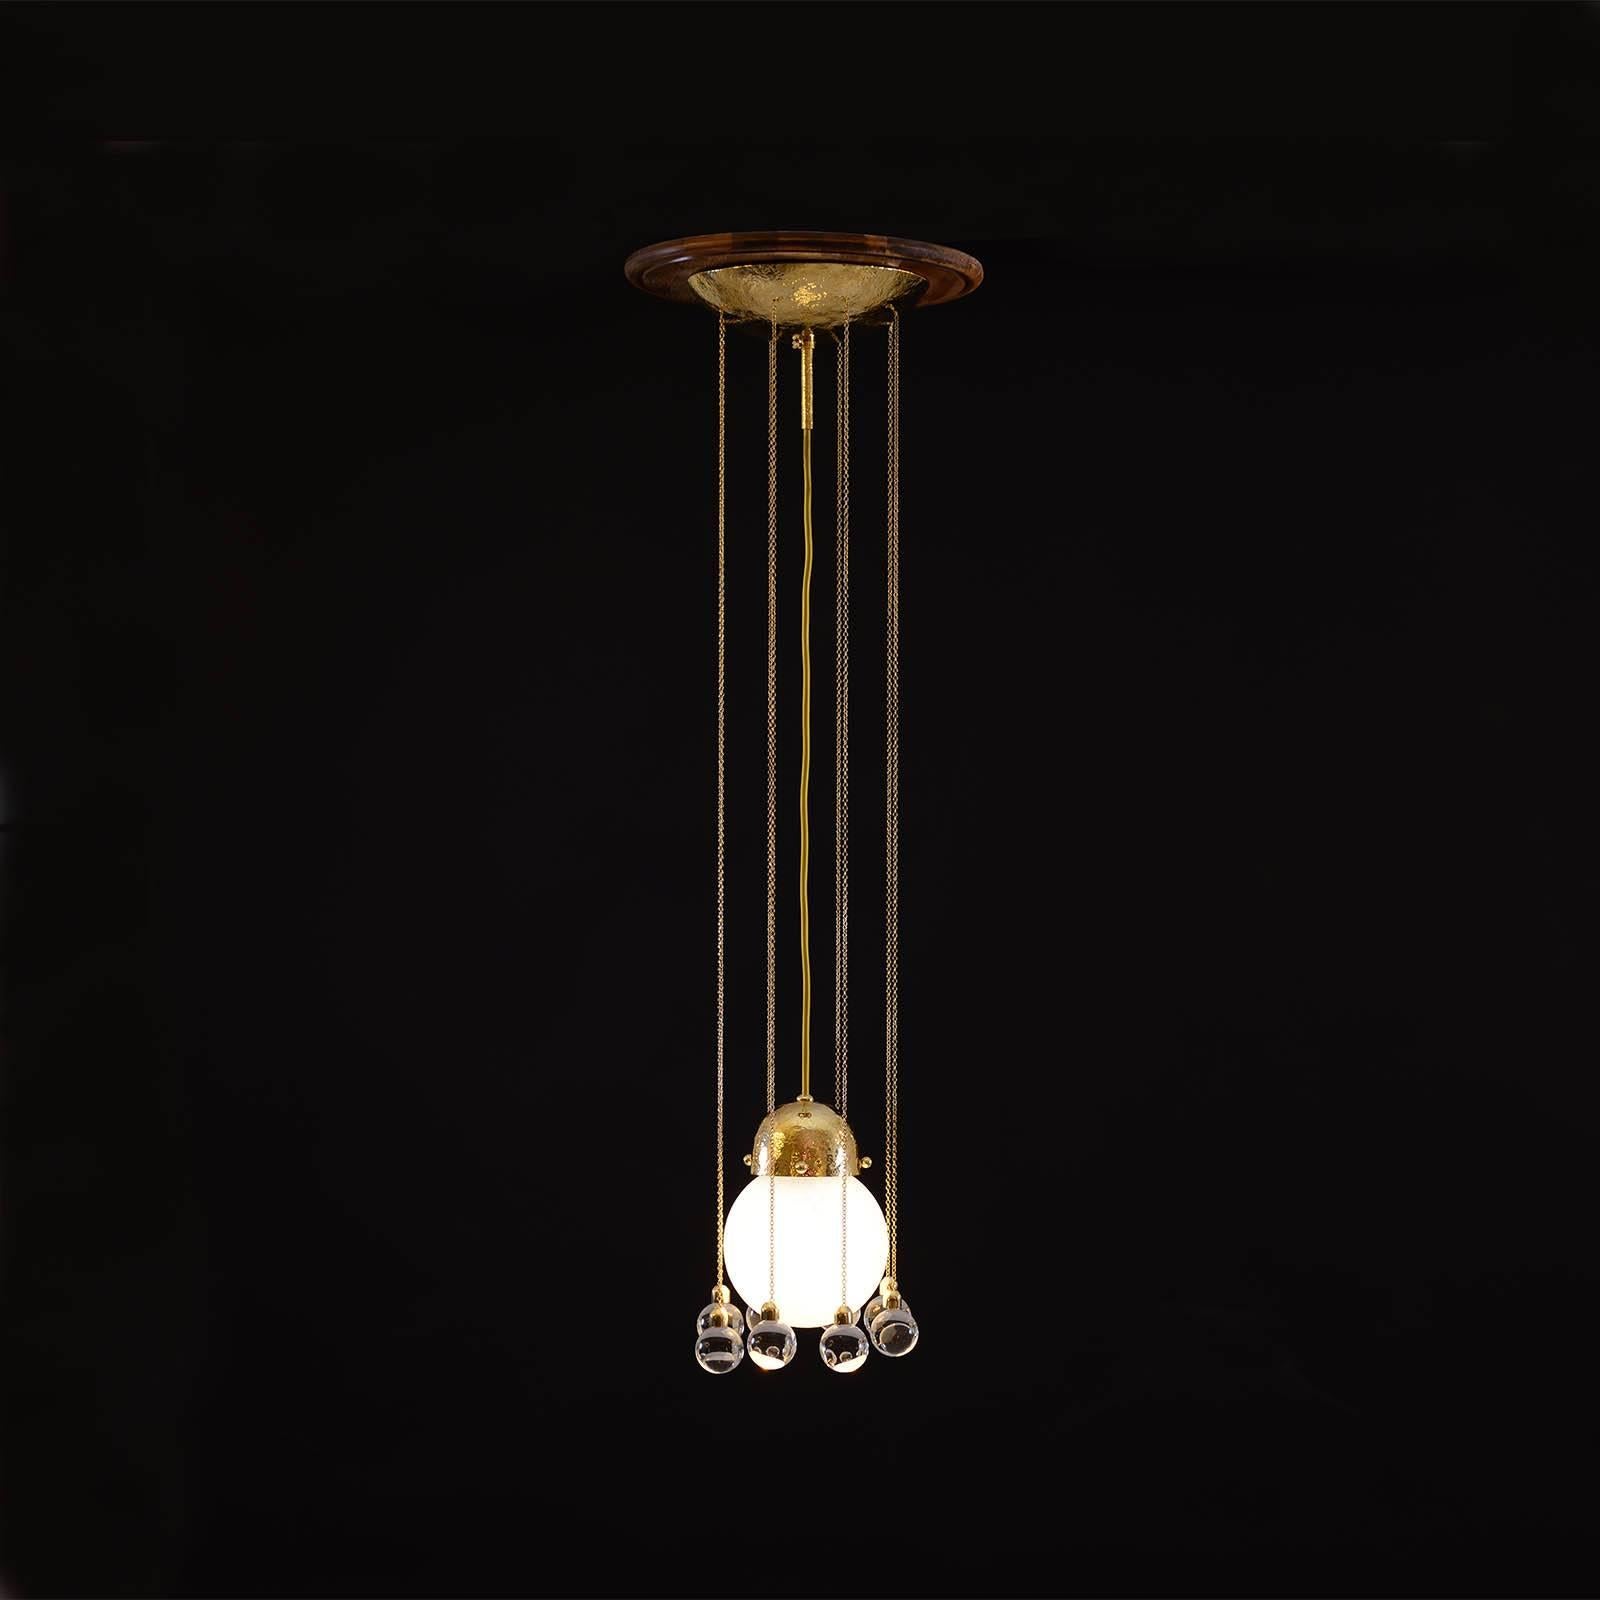 Jugendstil Josef Hoffmann & Wiener Werkstaette Ceiling Lamp, Re-Edition